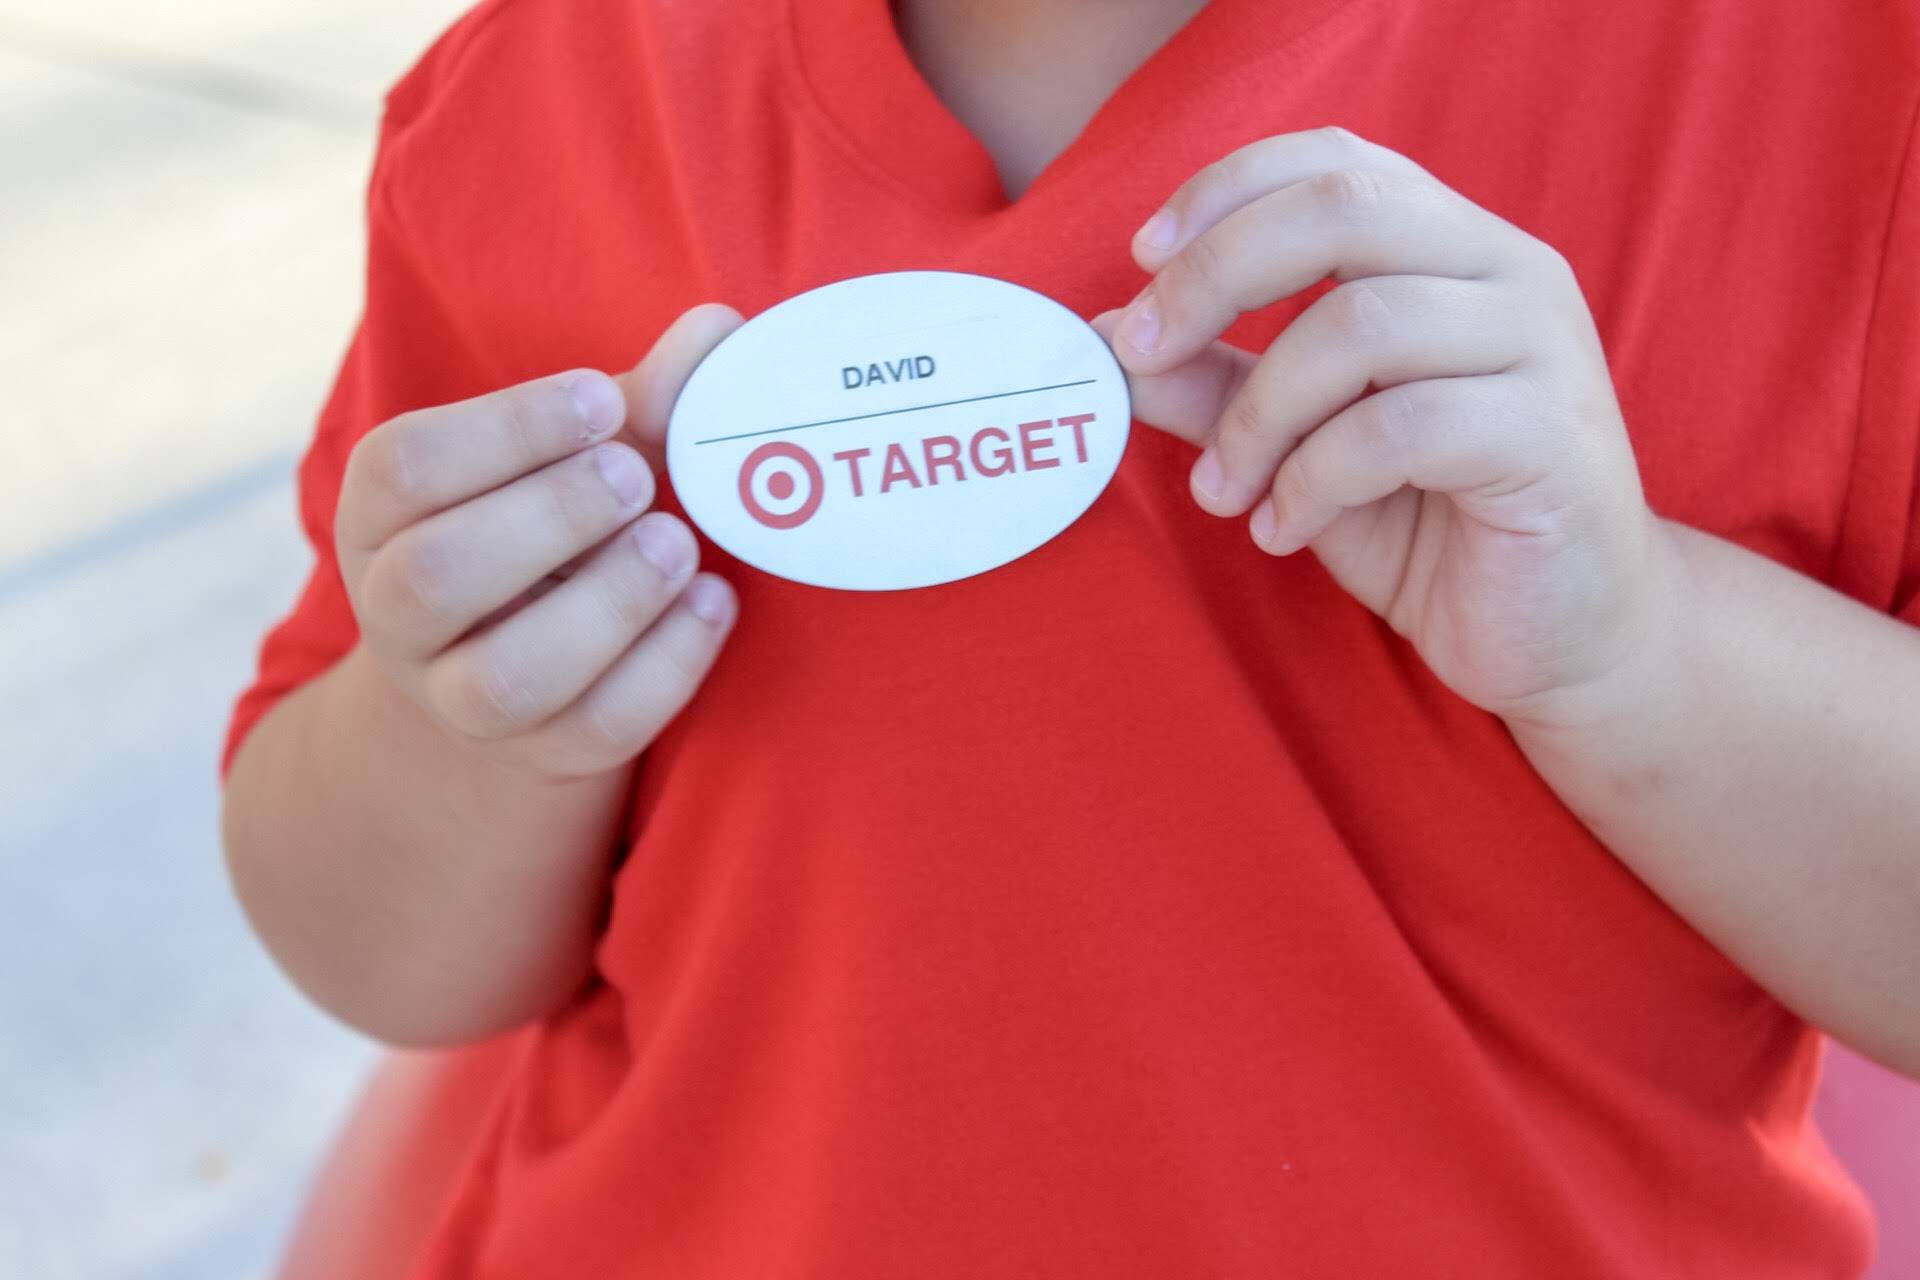 target name tags